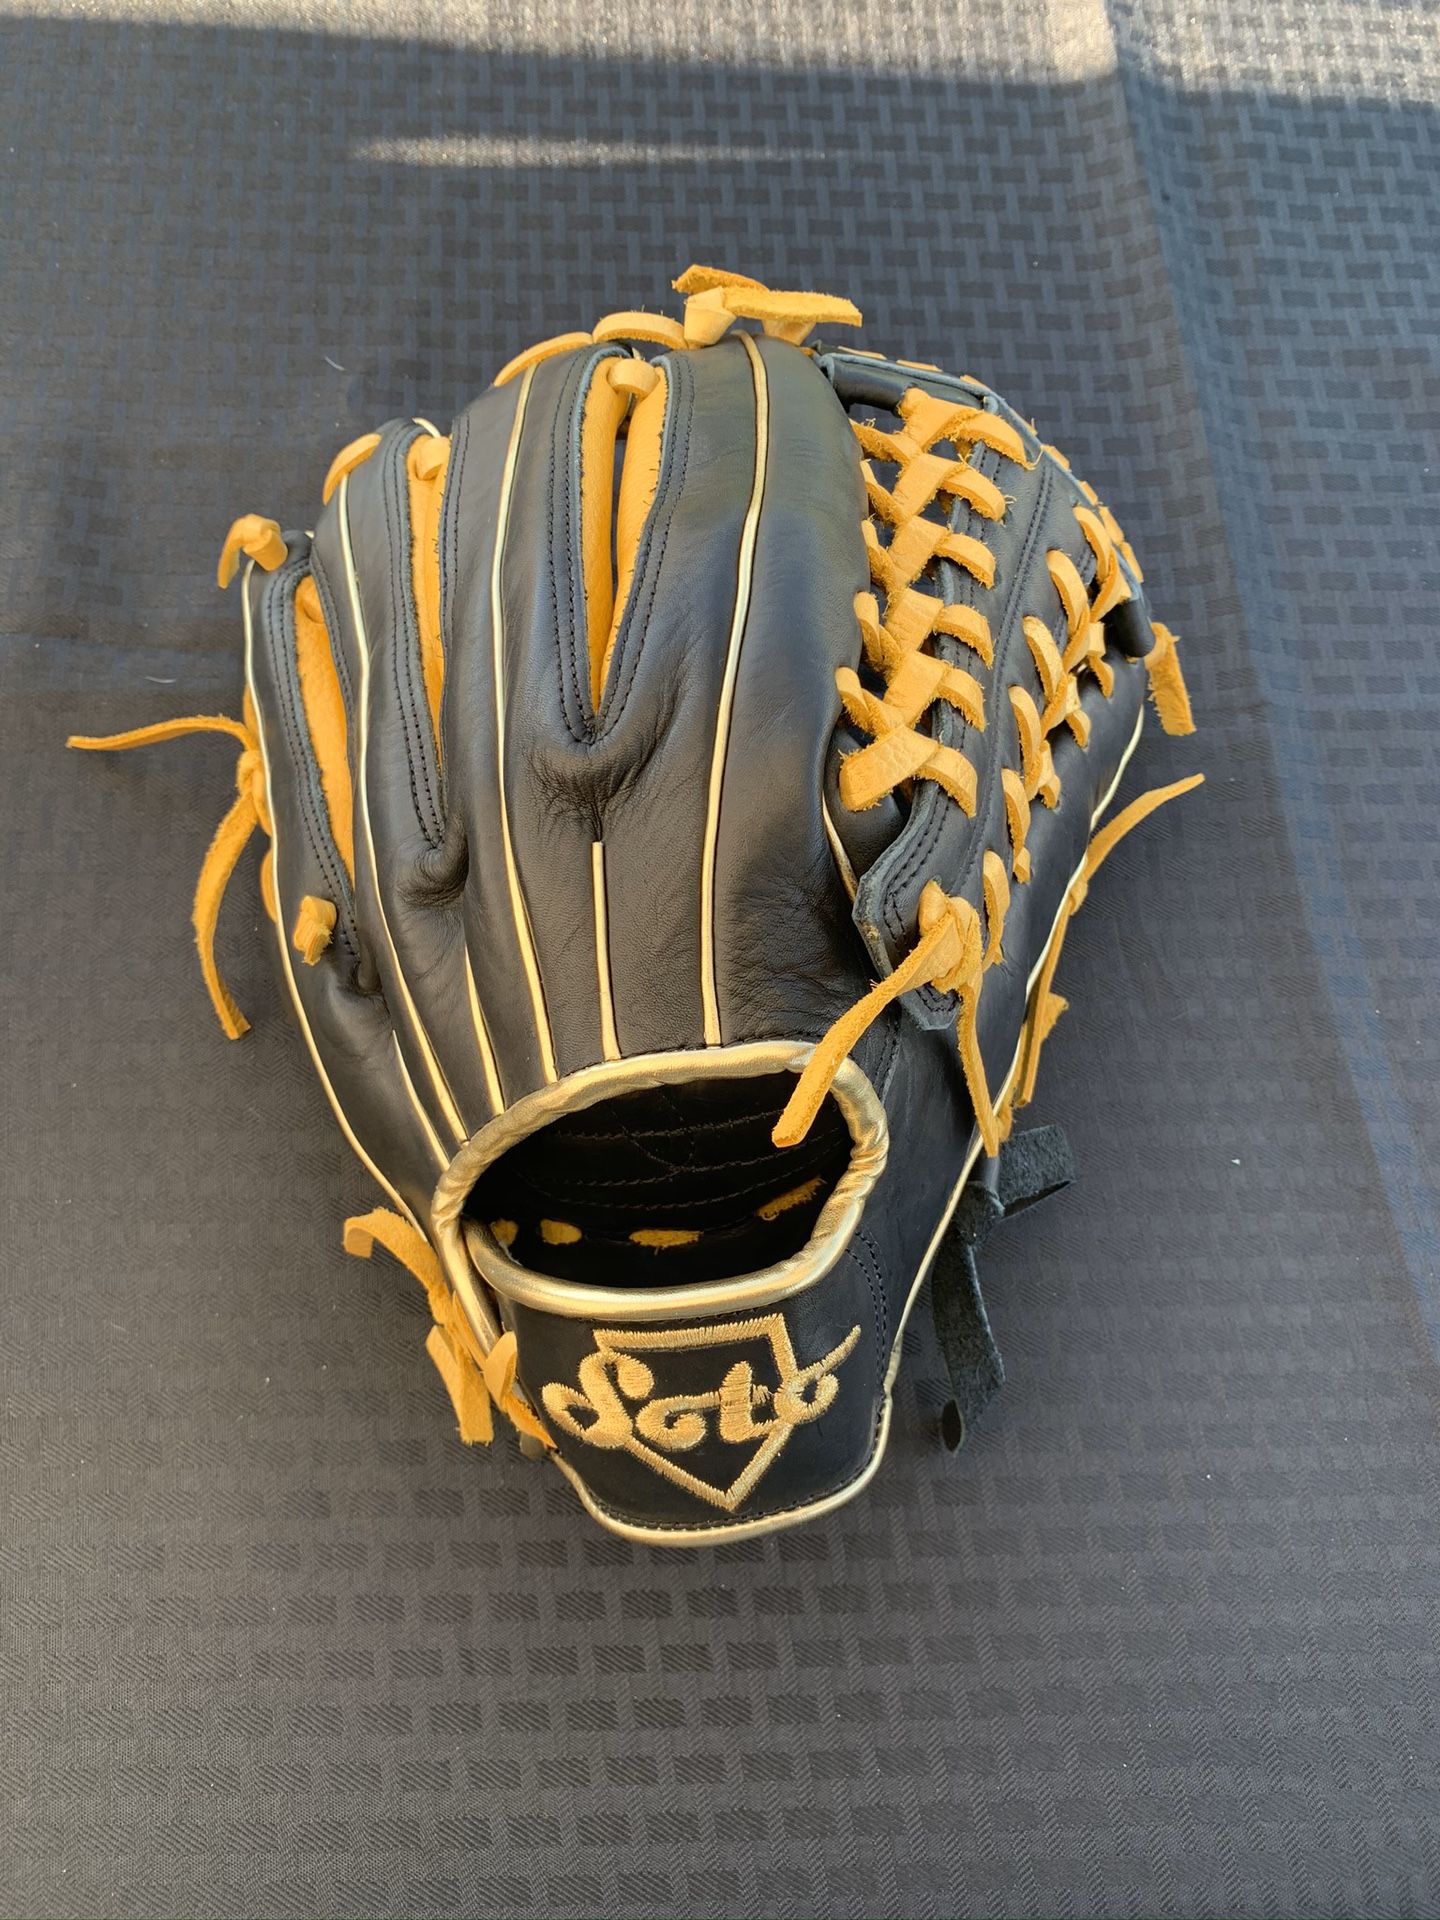 New Soto baseball /softball glove